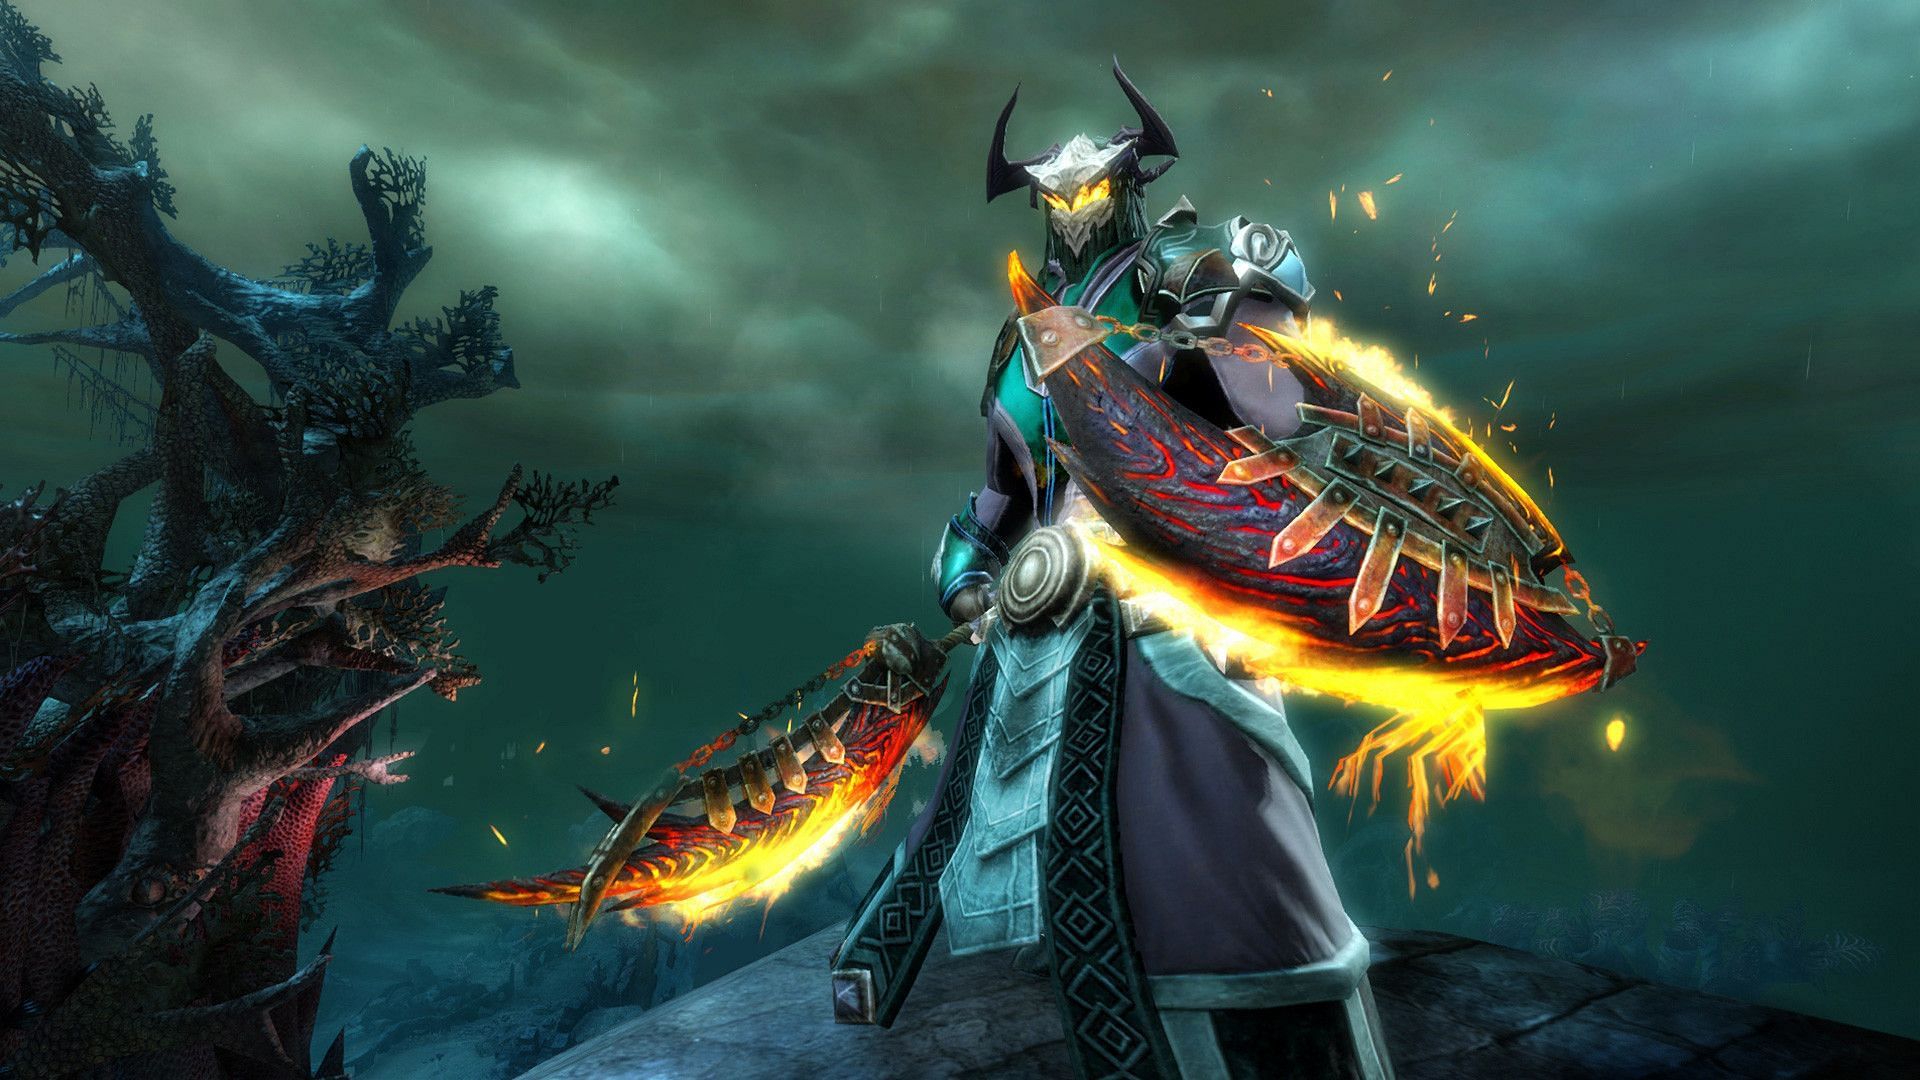 Guild Wars 2 is an award-winning MMORPG from ArenaNet (Image via NCSoft)